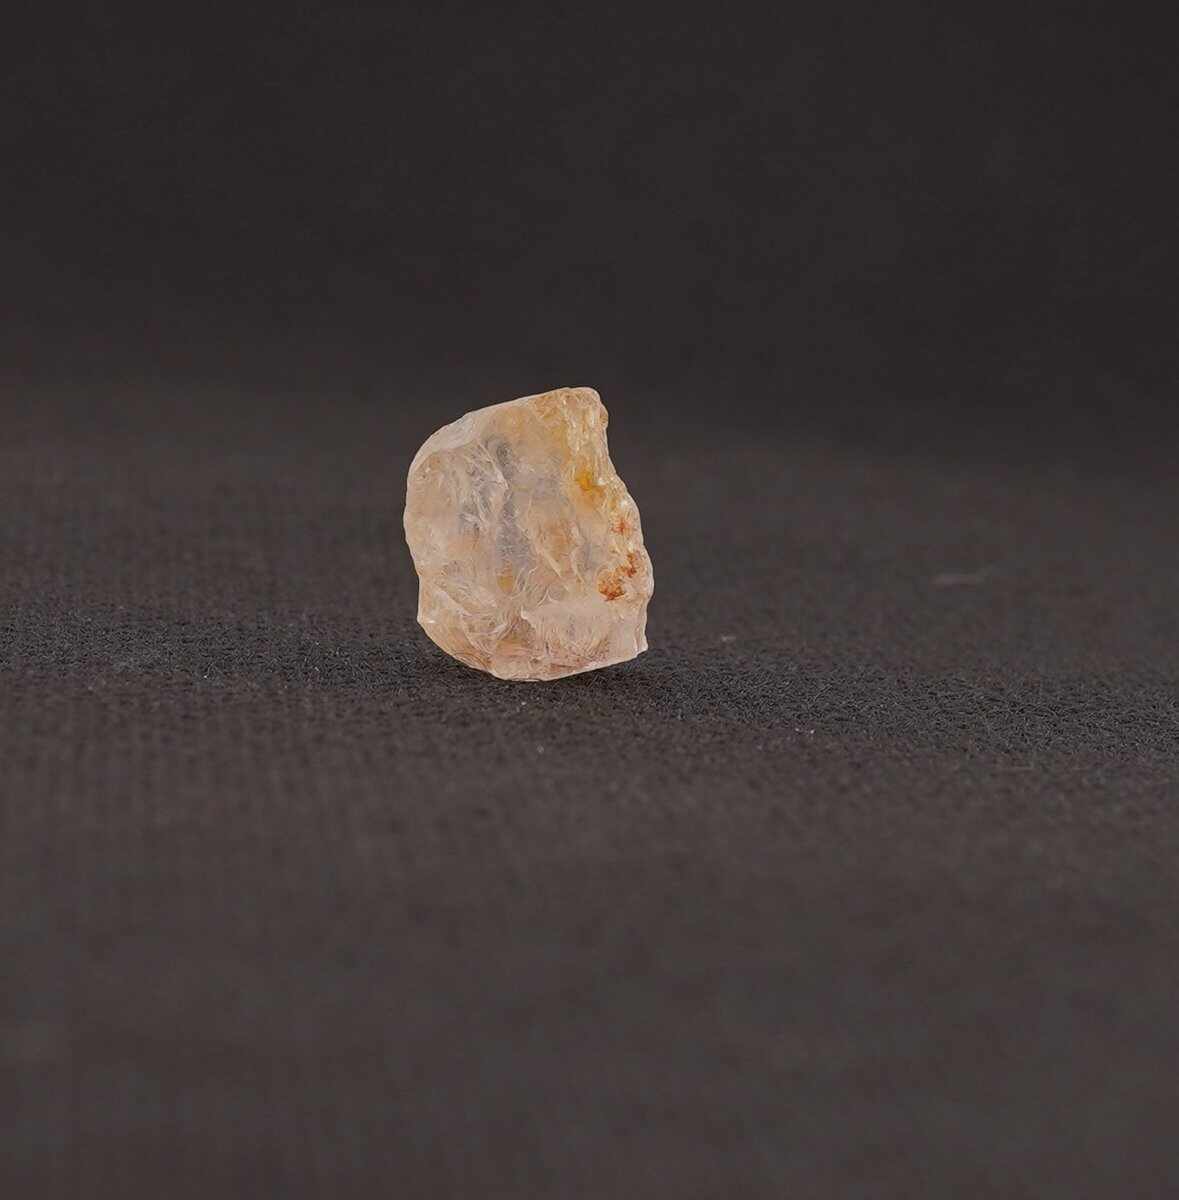 Fenacit nigerian cristal natural unicat f232